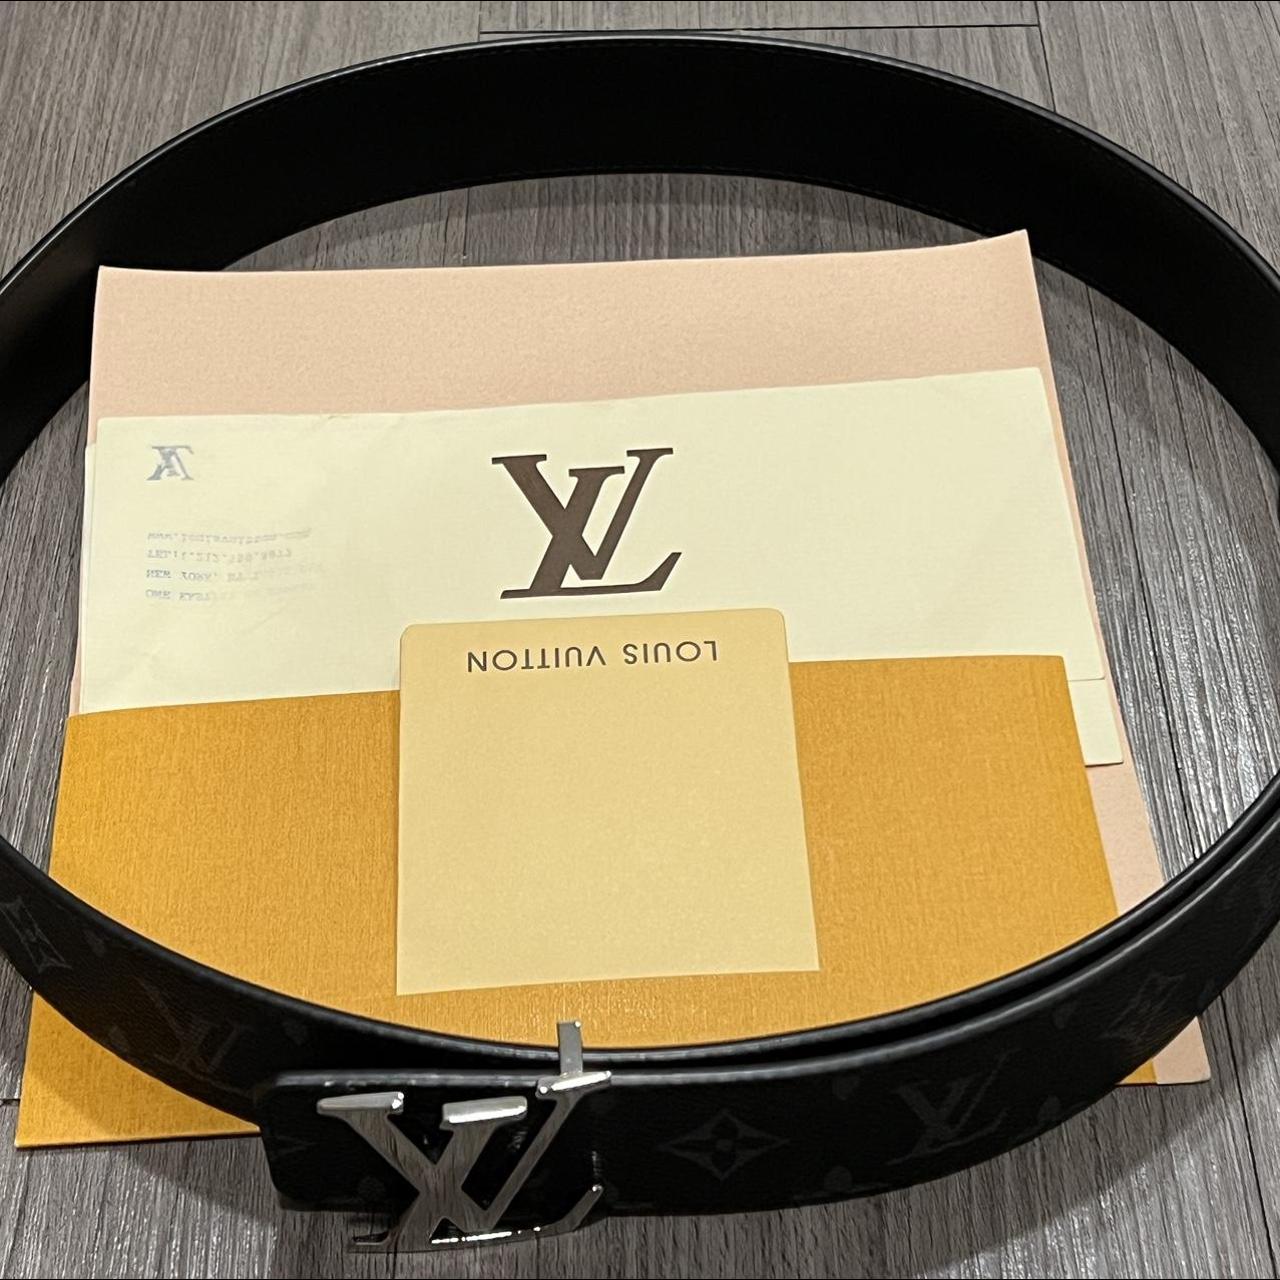 Louis Vuitton LV Broken 40MM Reversible Belt 110cm • - Depop